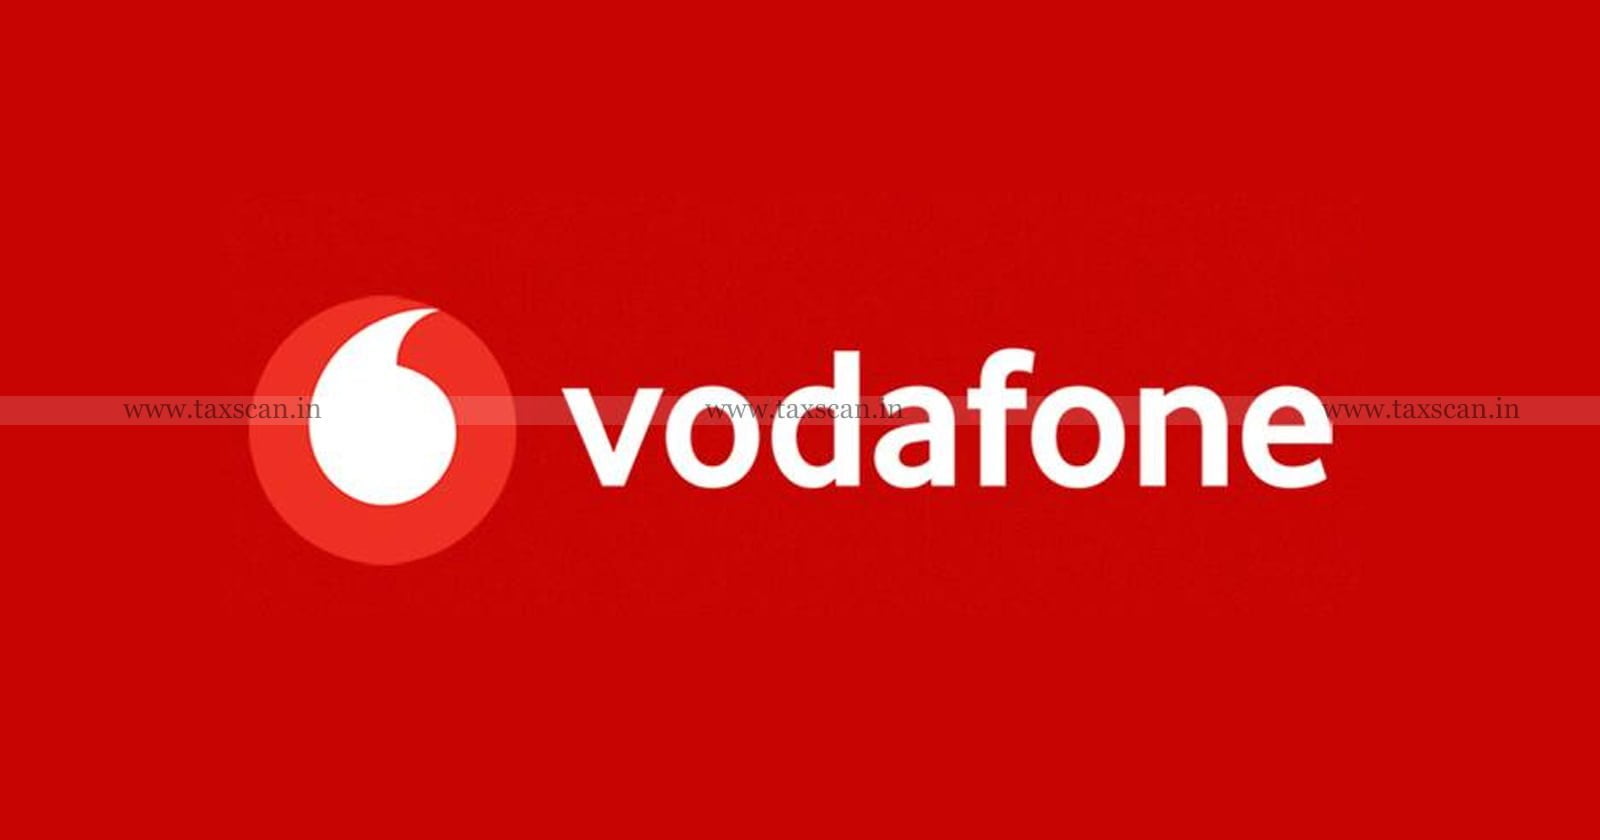 CENVAT Credit - Service Tax liability - Payment - CESTAT quashes Order - CESTAT quashes Order against Vodafone - taxscan